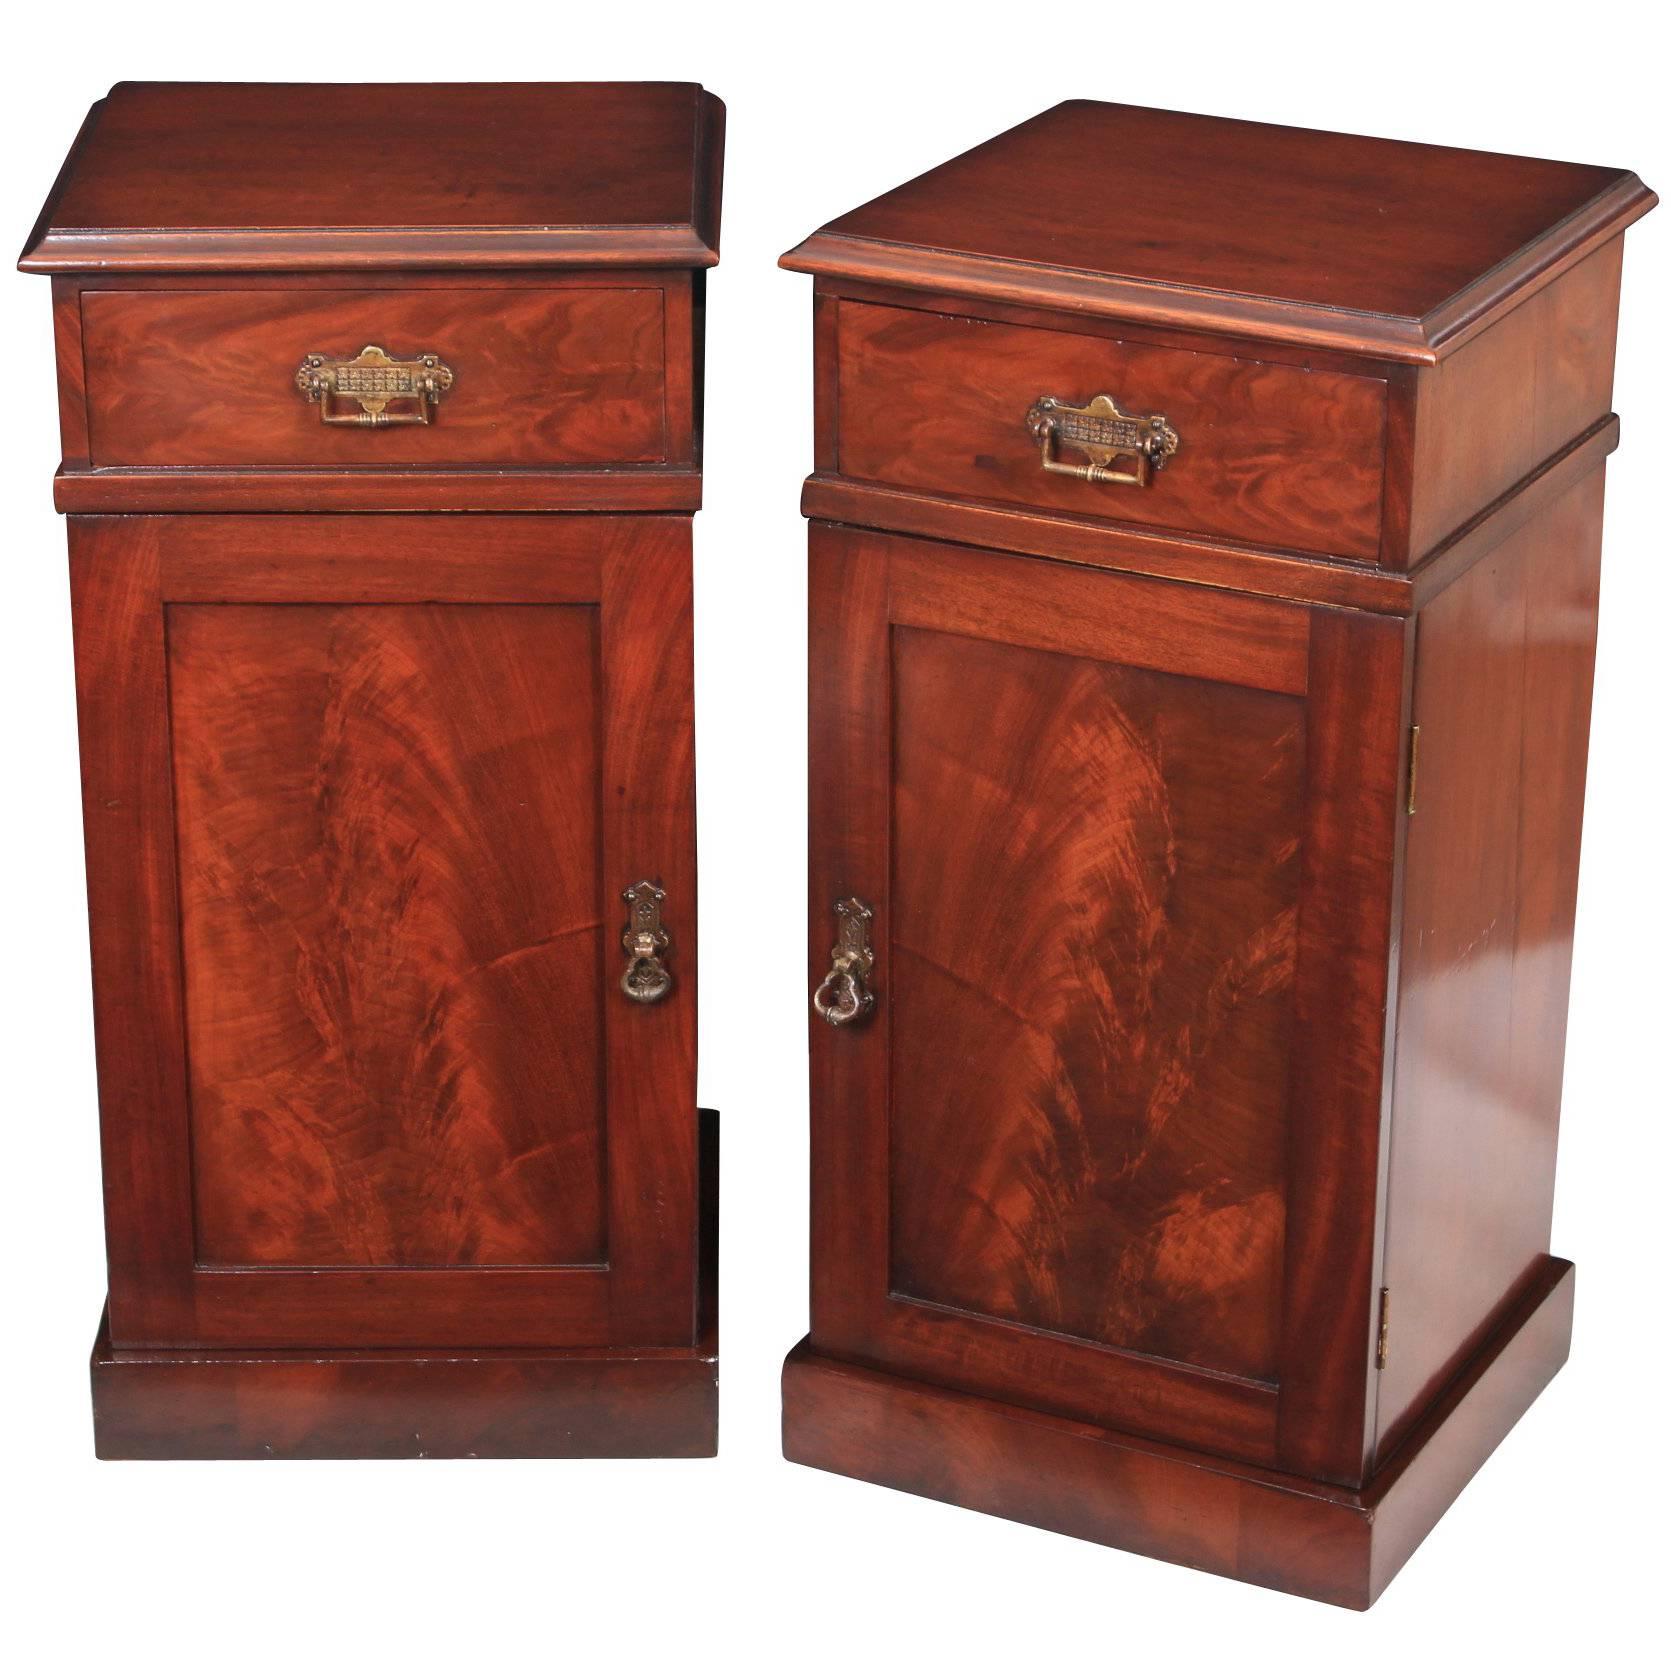 Pair of Mahogany Bedside Cabinets